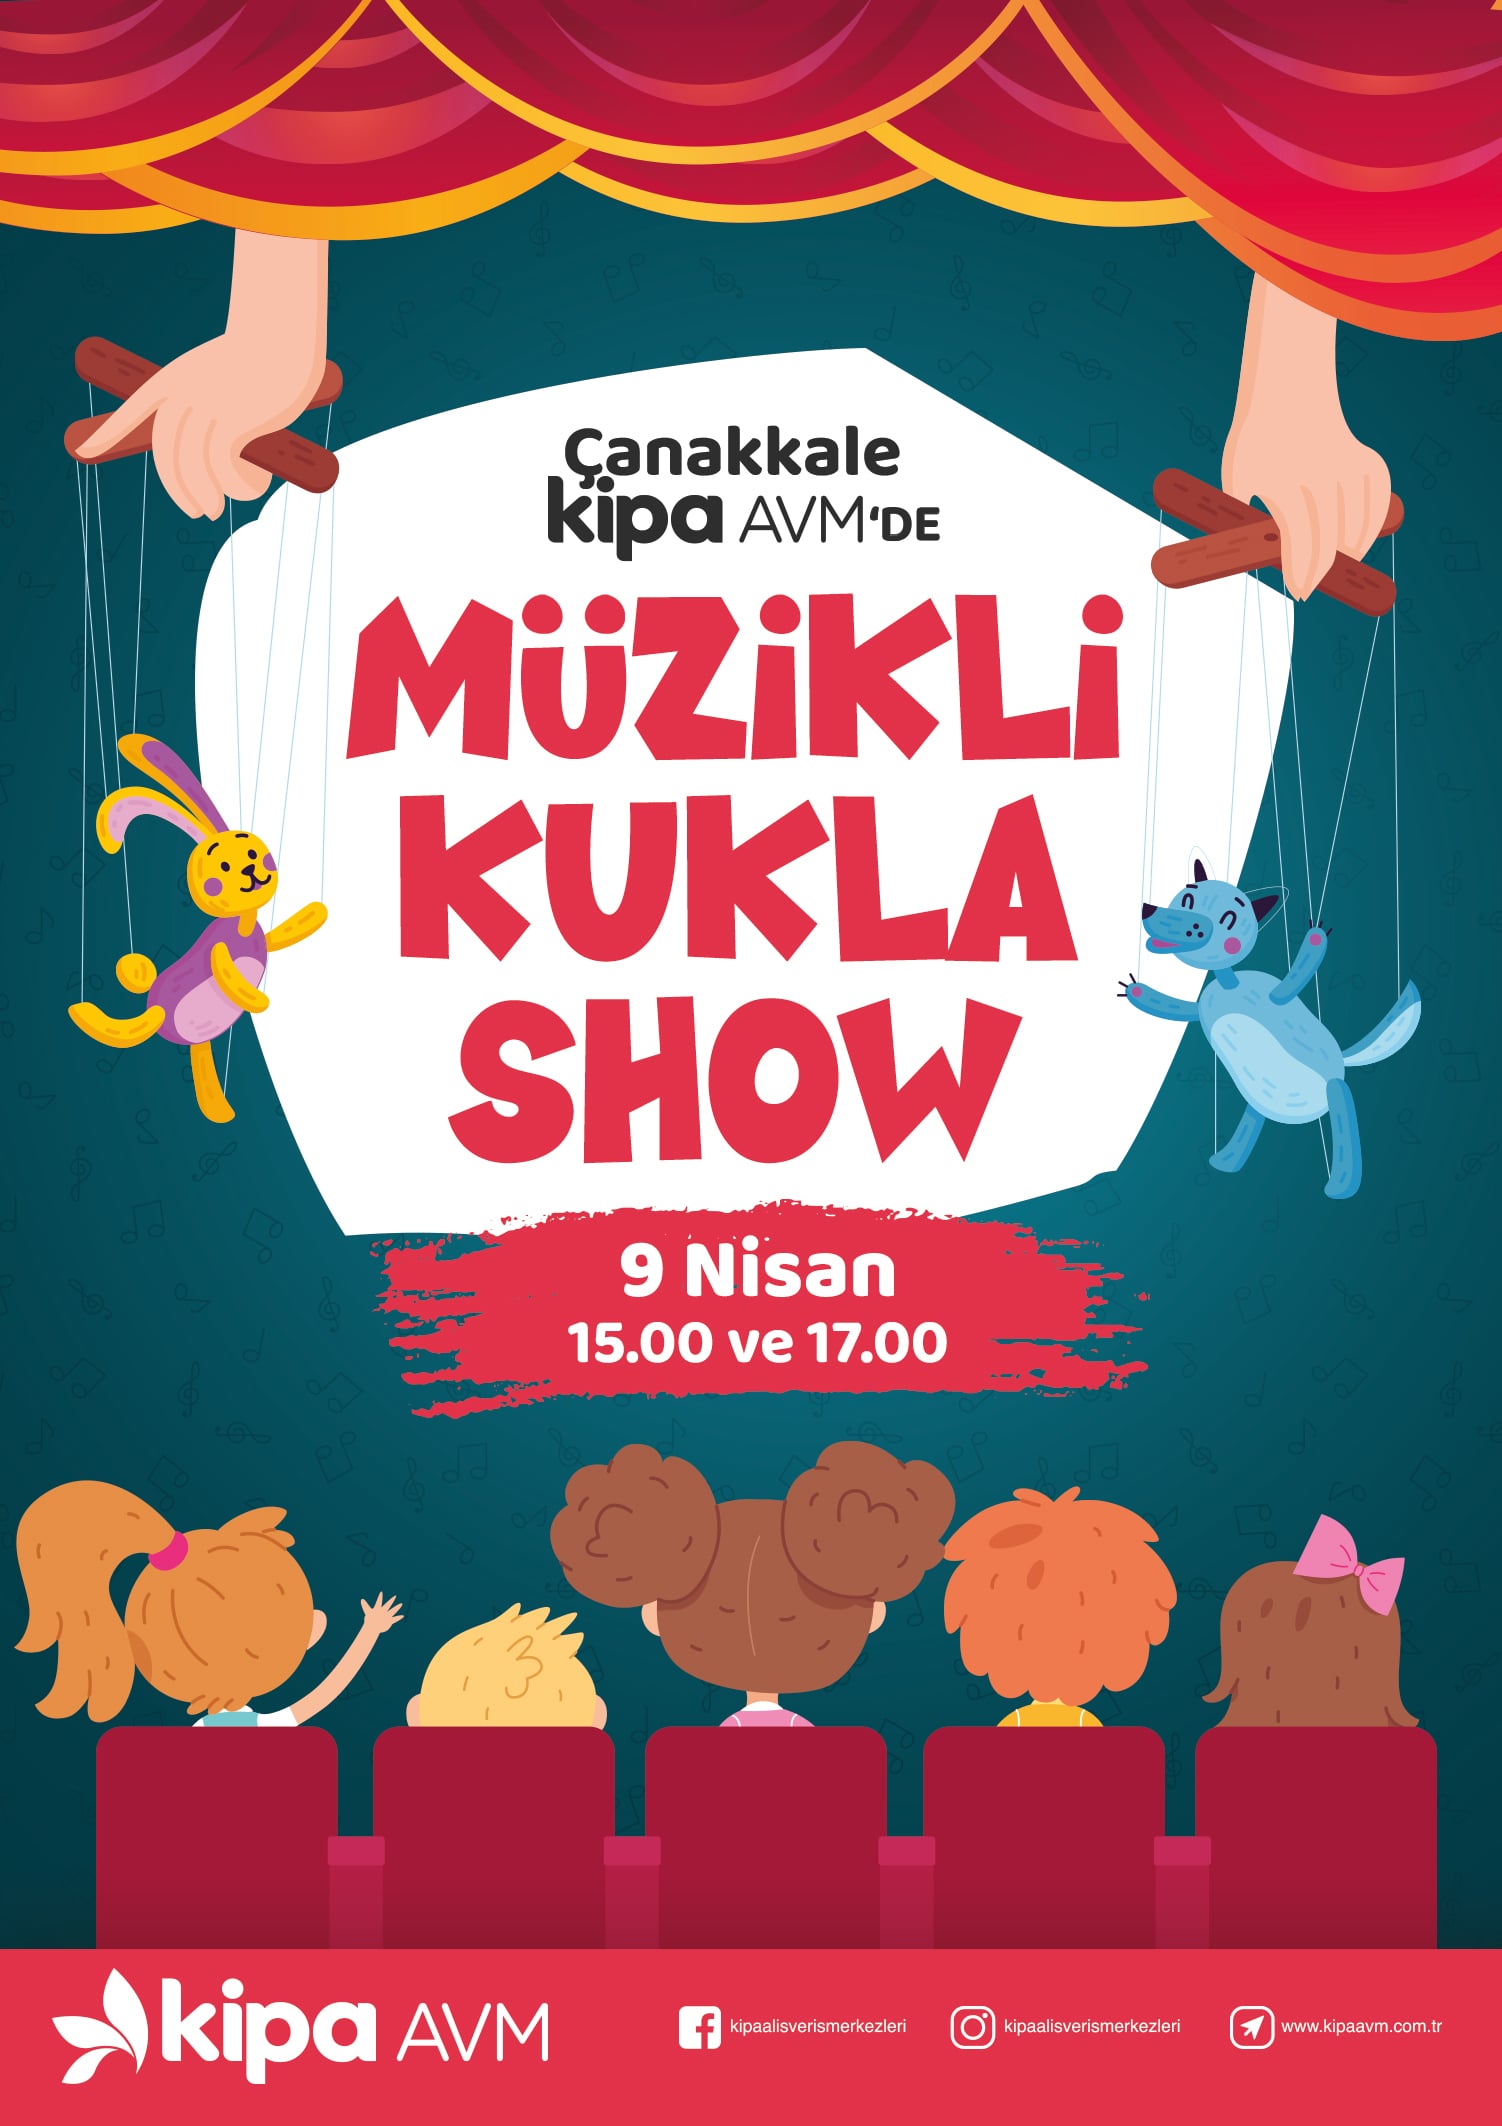 Müzikli Kukla Show Çanakkale Kipa AVM'de!